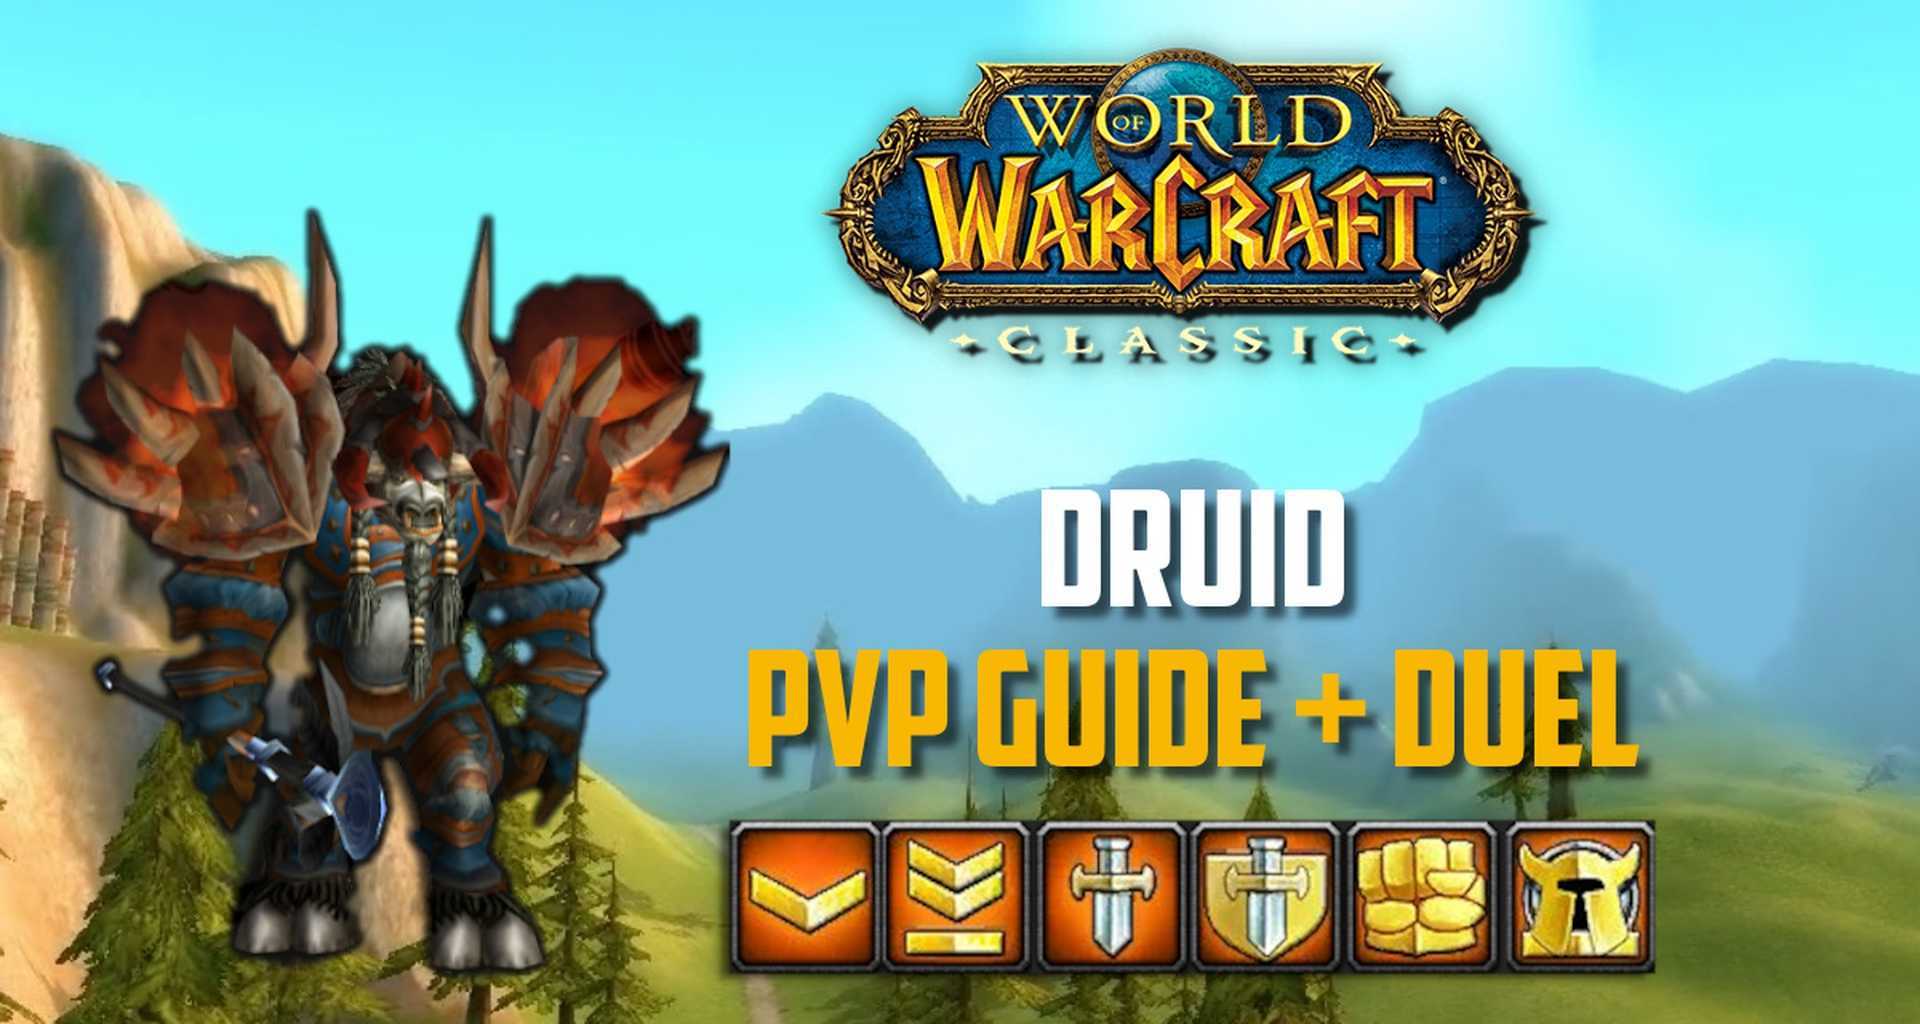 Feral druid guide - dragonflight 10.0 - kboosting